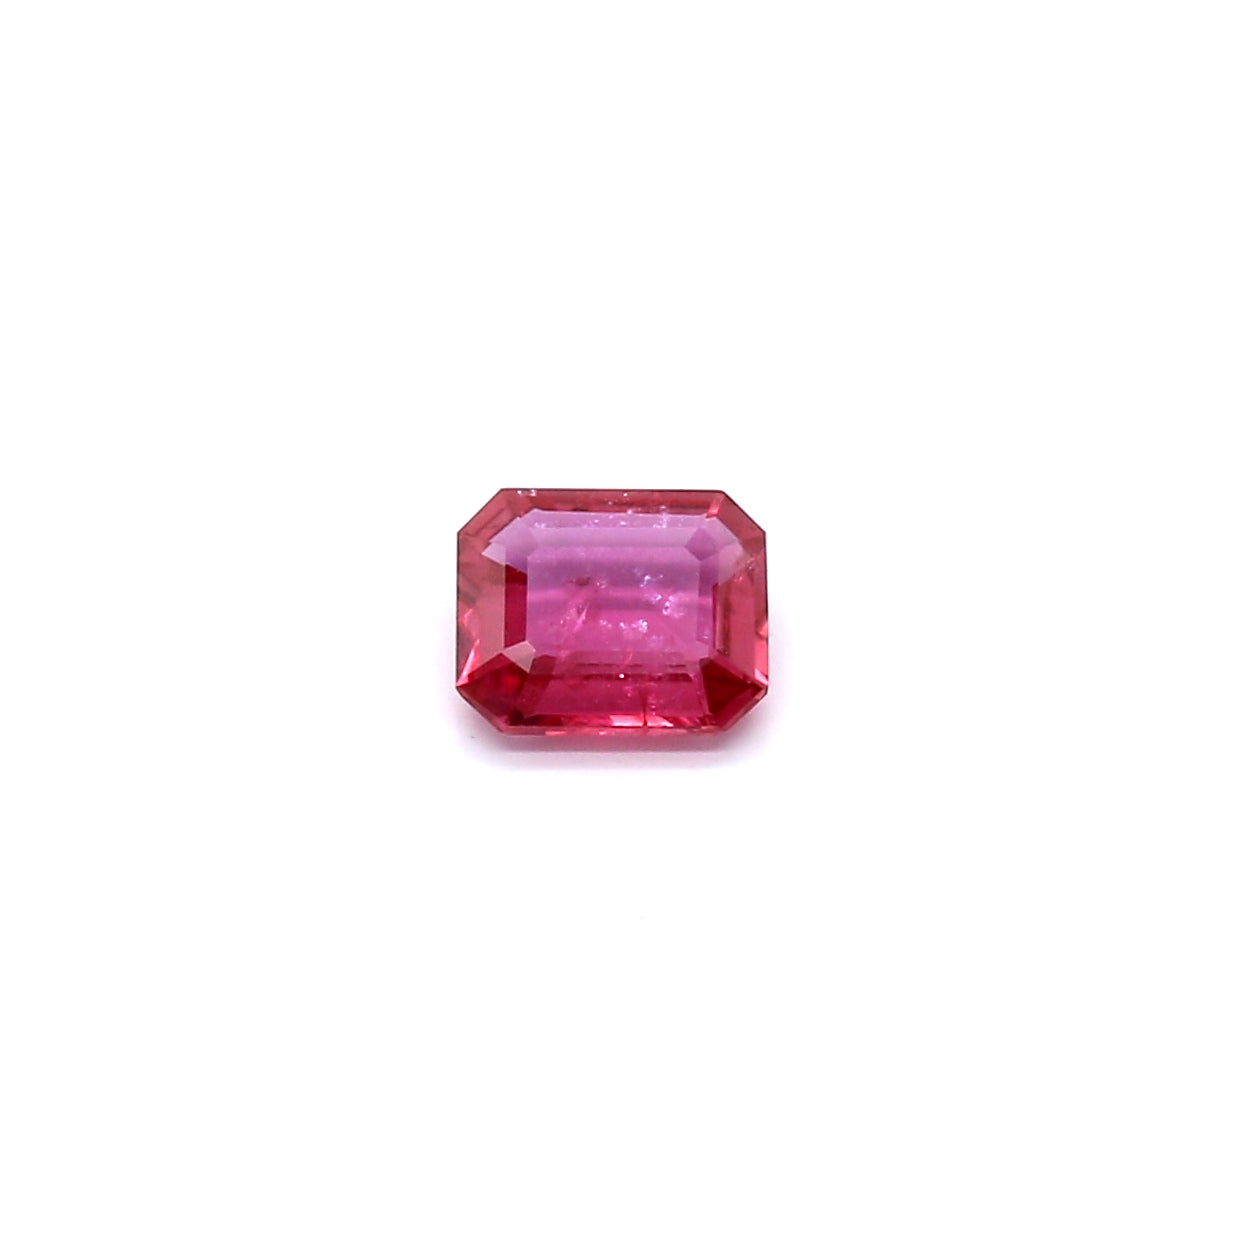 0.57ct Purplish Red, Octagon Ruby, Heated, Thailand - 5.44 x 4.68 x 1.97mm